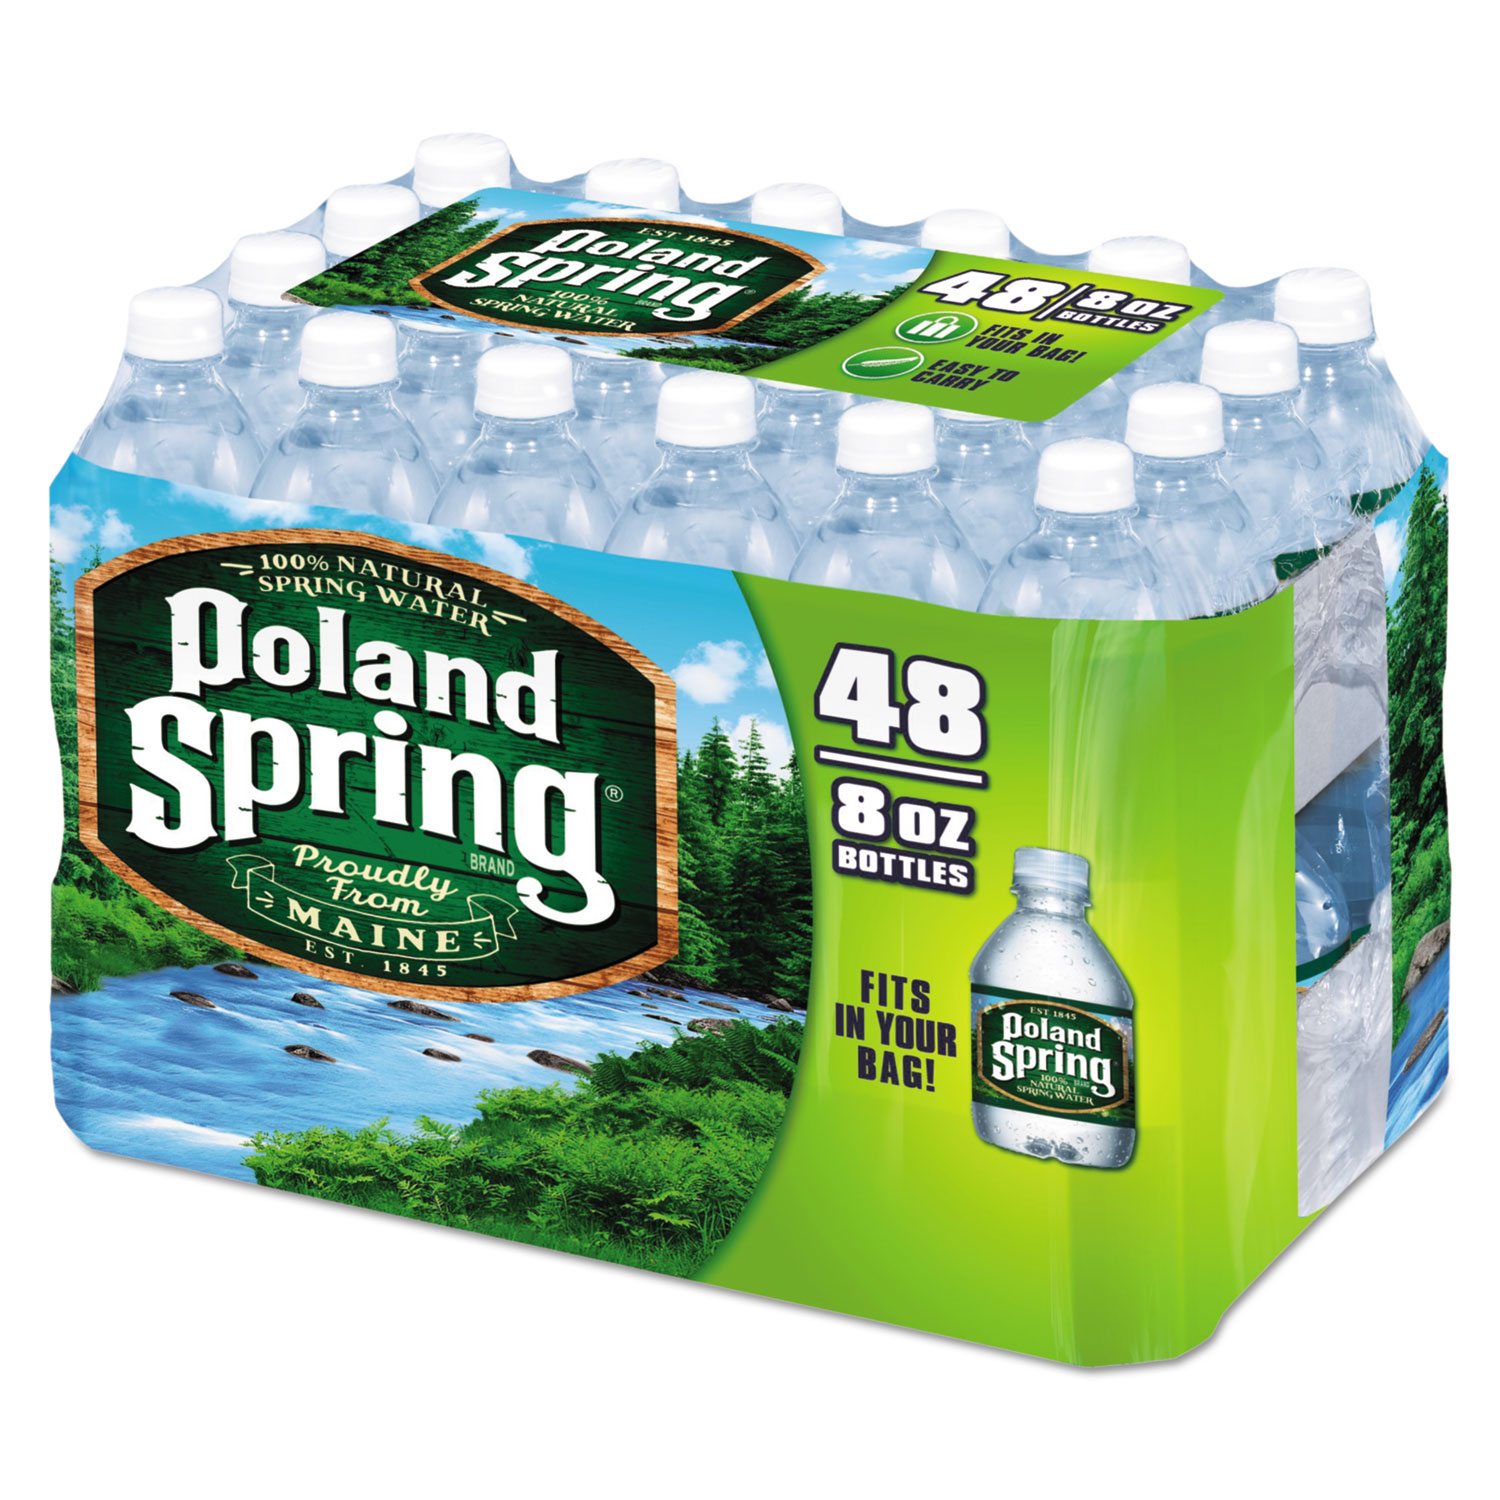  Poland Spring 1098091 Natural Spring Water, 8 oz Bottle, 48 Bottles/Carton (NLE1098091) 